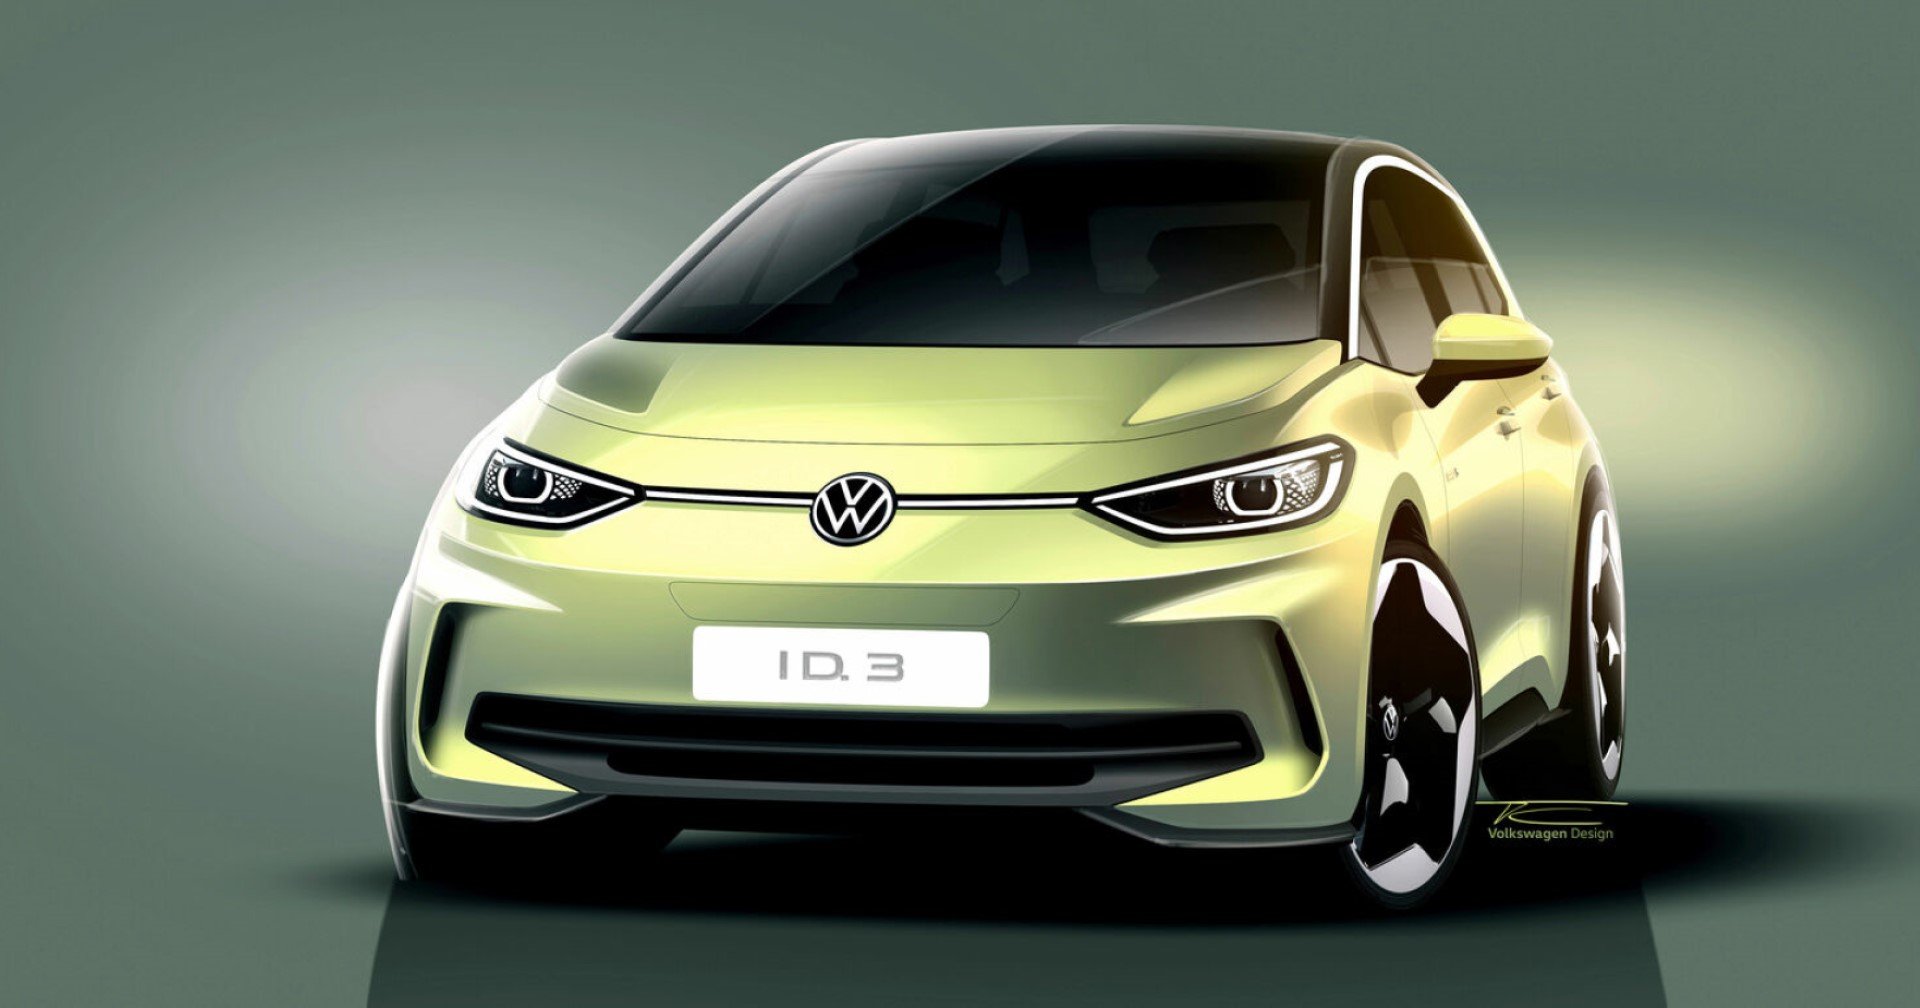 Volkswagen ปล่อยภาพตัวอย่าง ID.3 Gen2 ปรับปรุงการออกแบบและอัปเกรดฟีเจอร์ใหม่